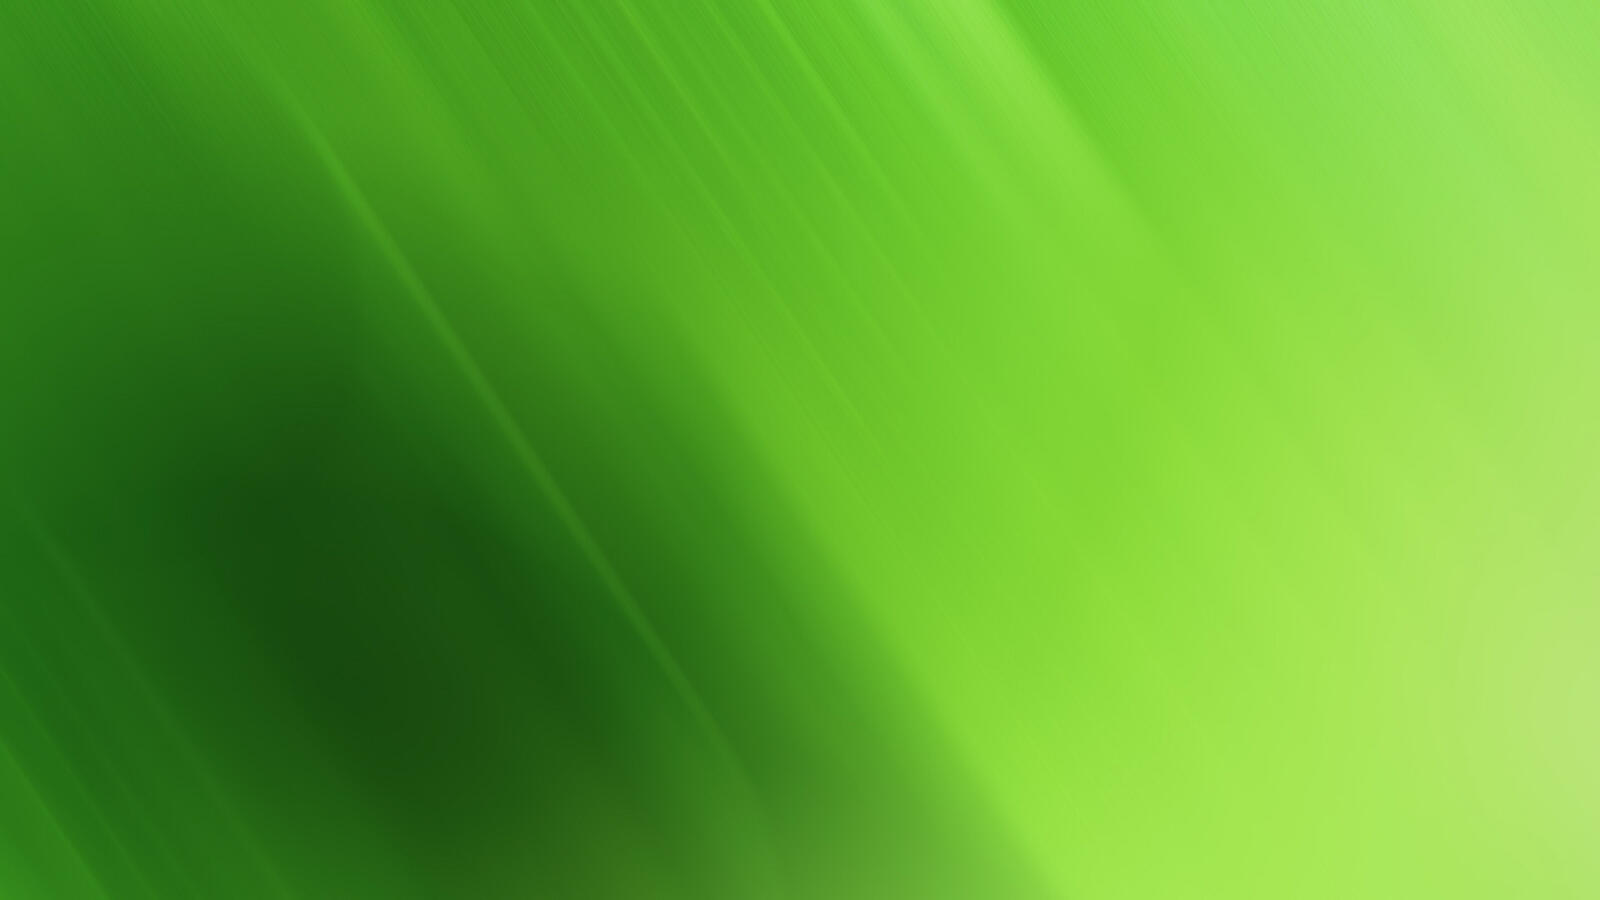 Wallpapers screensaver green shades on the desktop